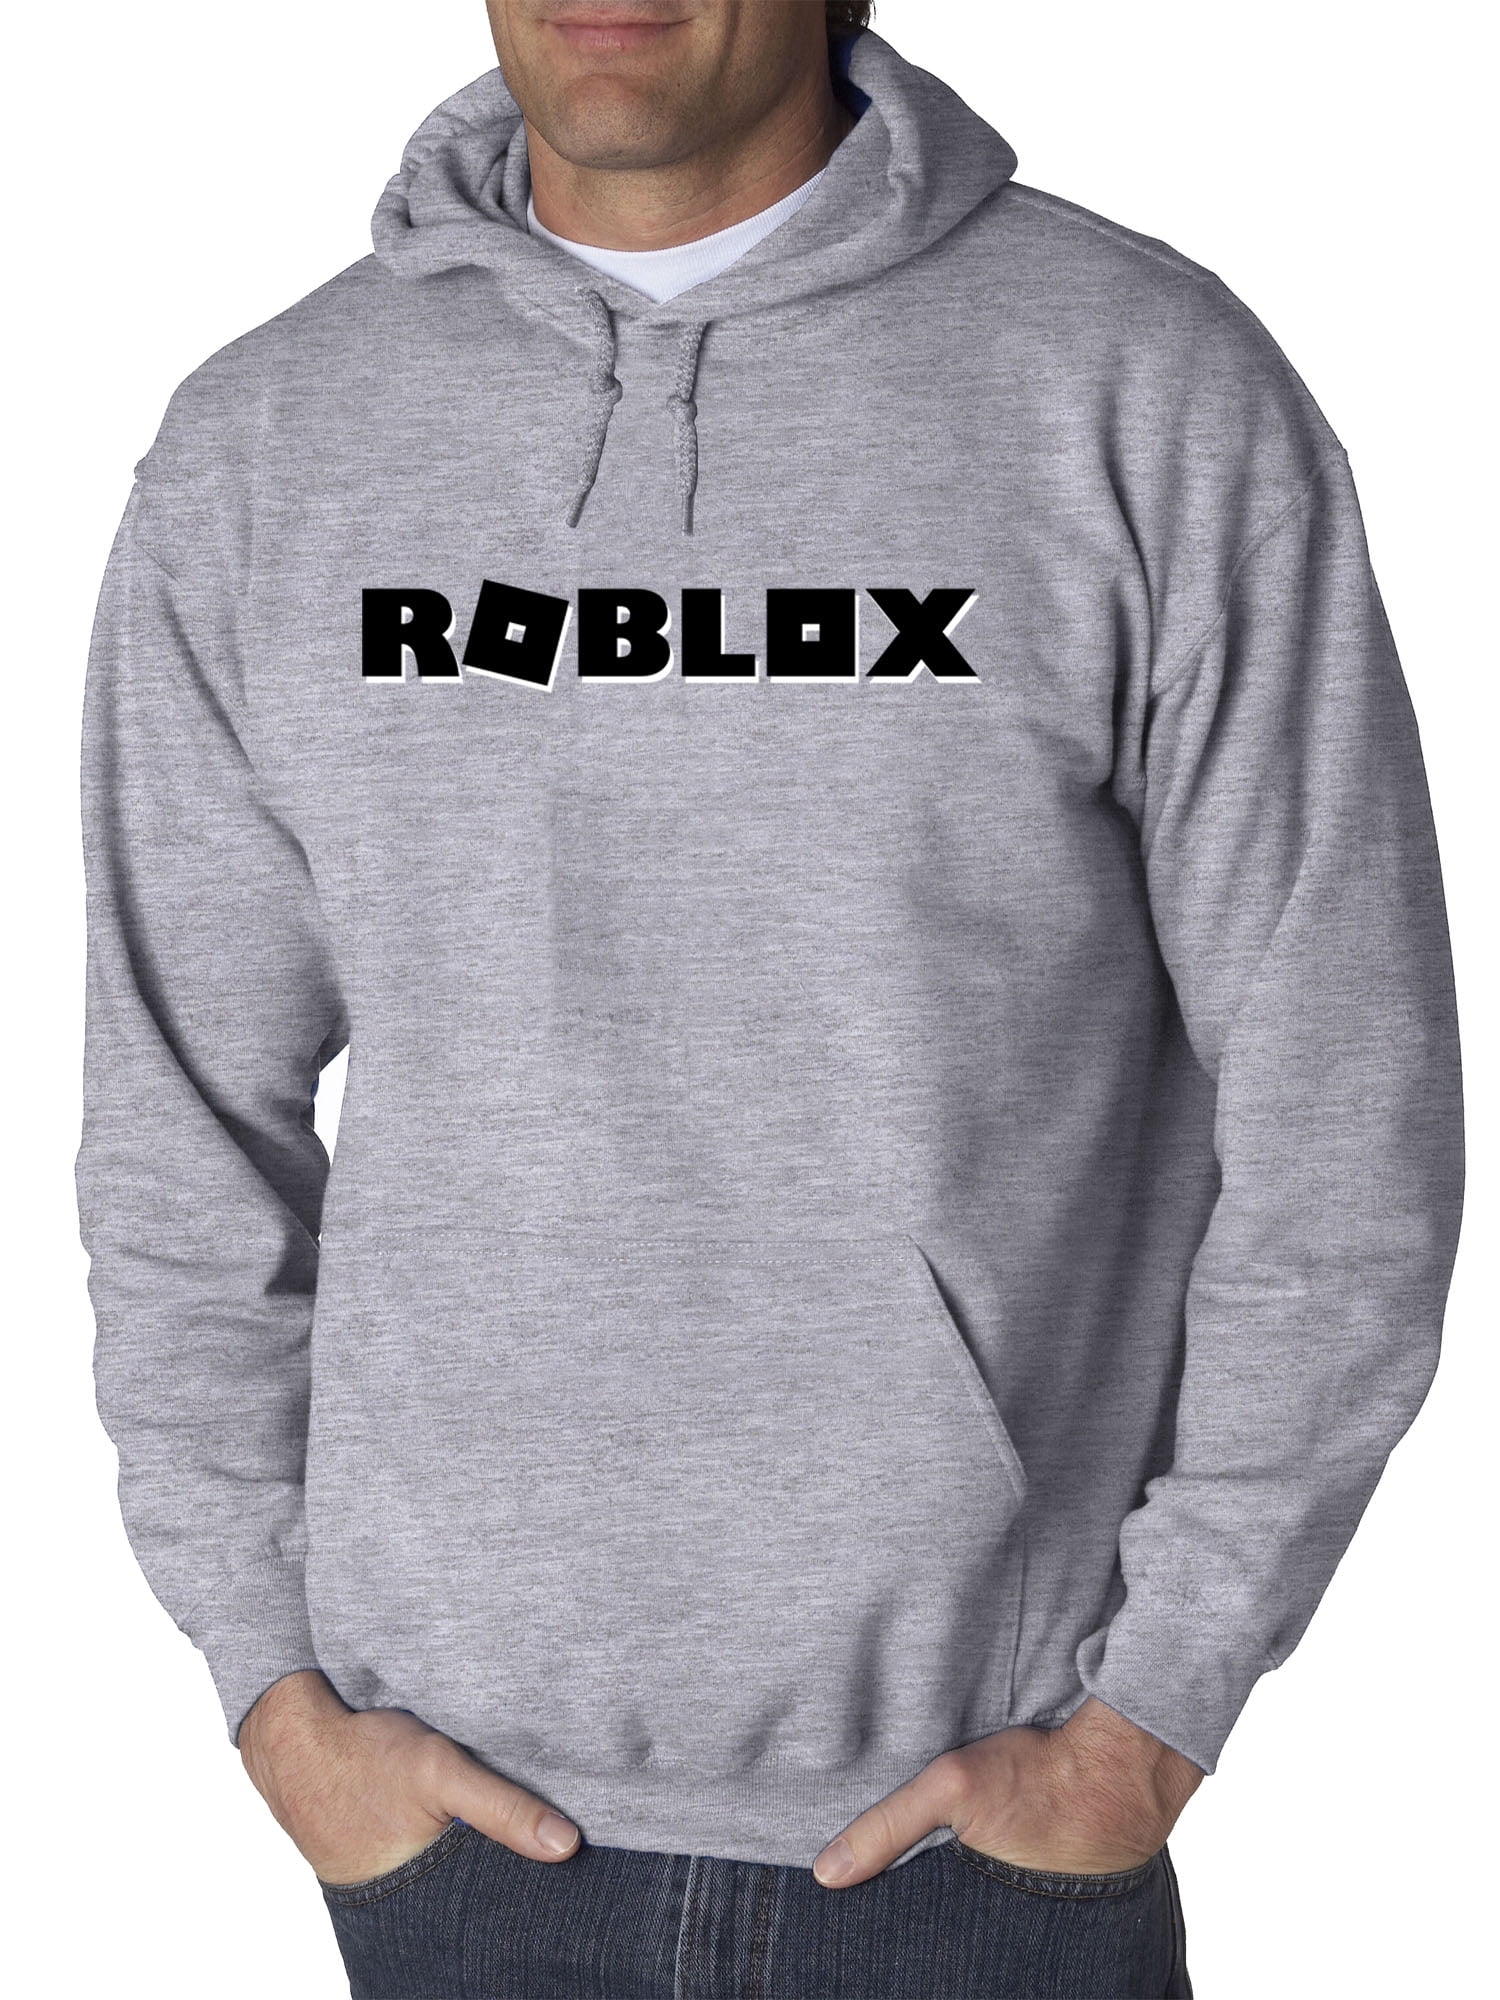 New Way 1168 Adult Hoodie Roblox Block Logo Game Accent Sweatshirt 2xl Heather Grey Walmart Com Walmart Com - roblox nintendo switch hoodie